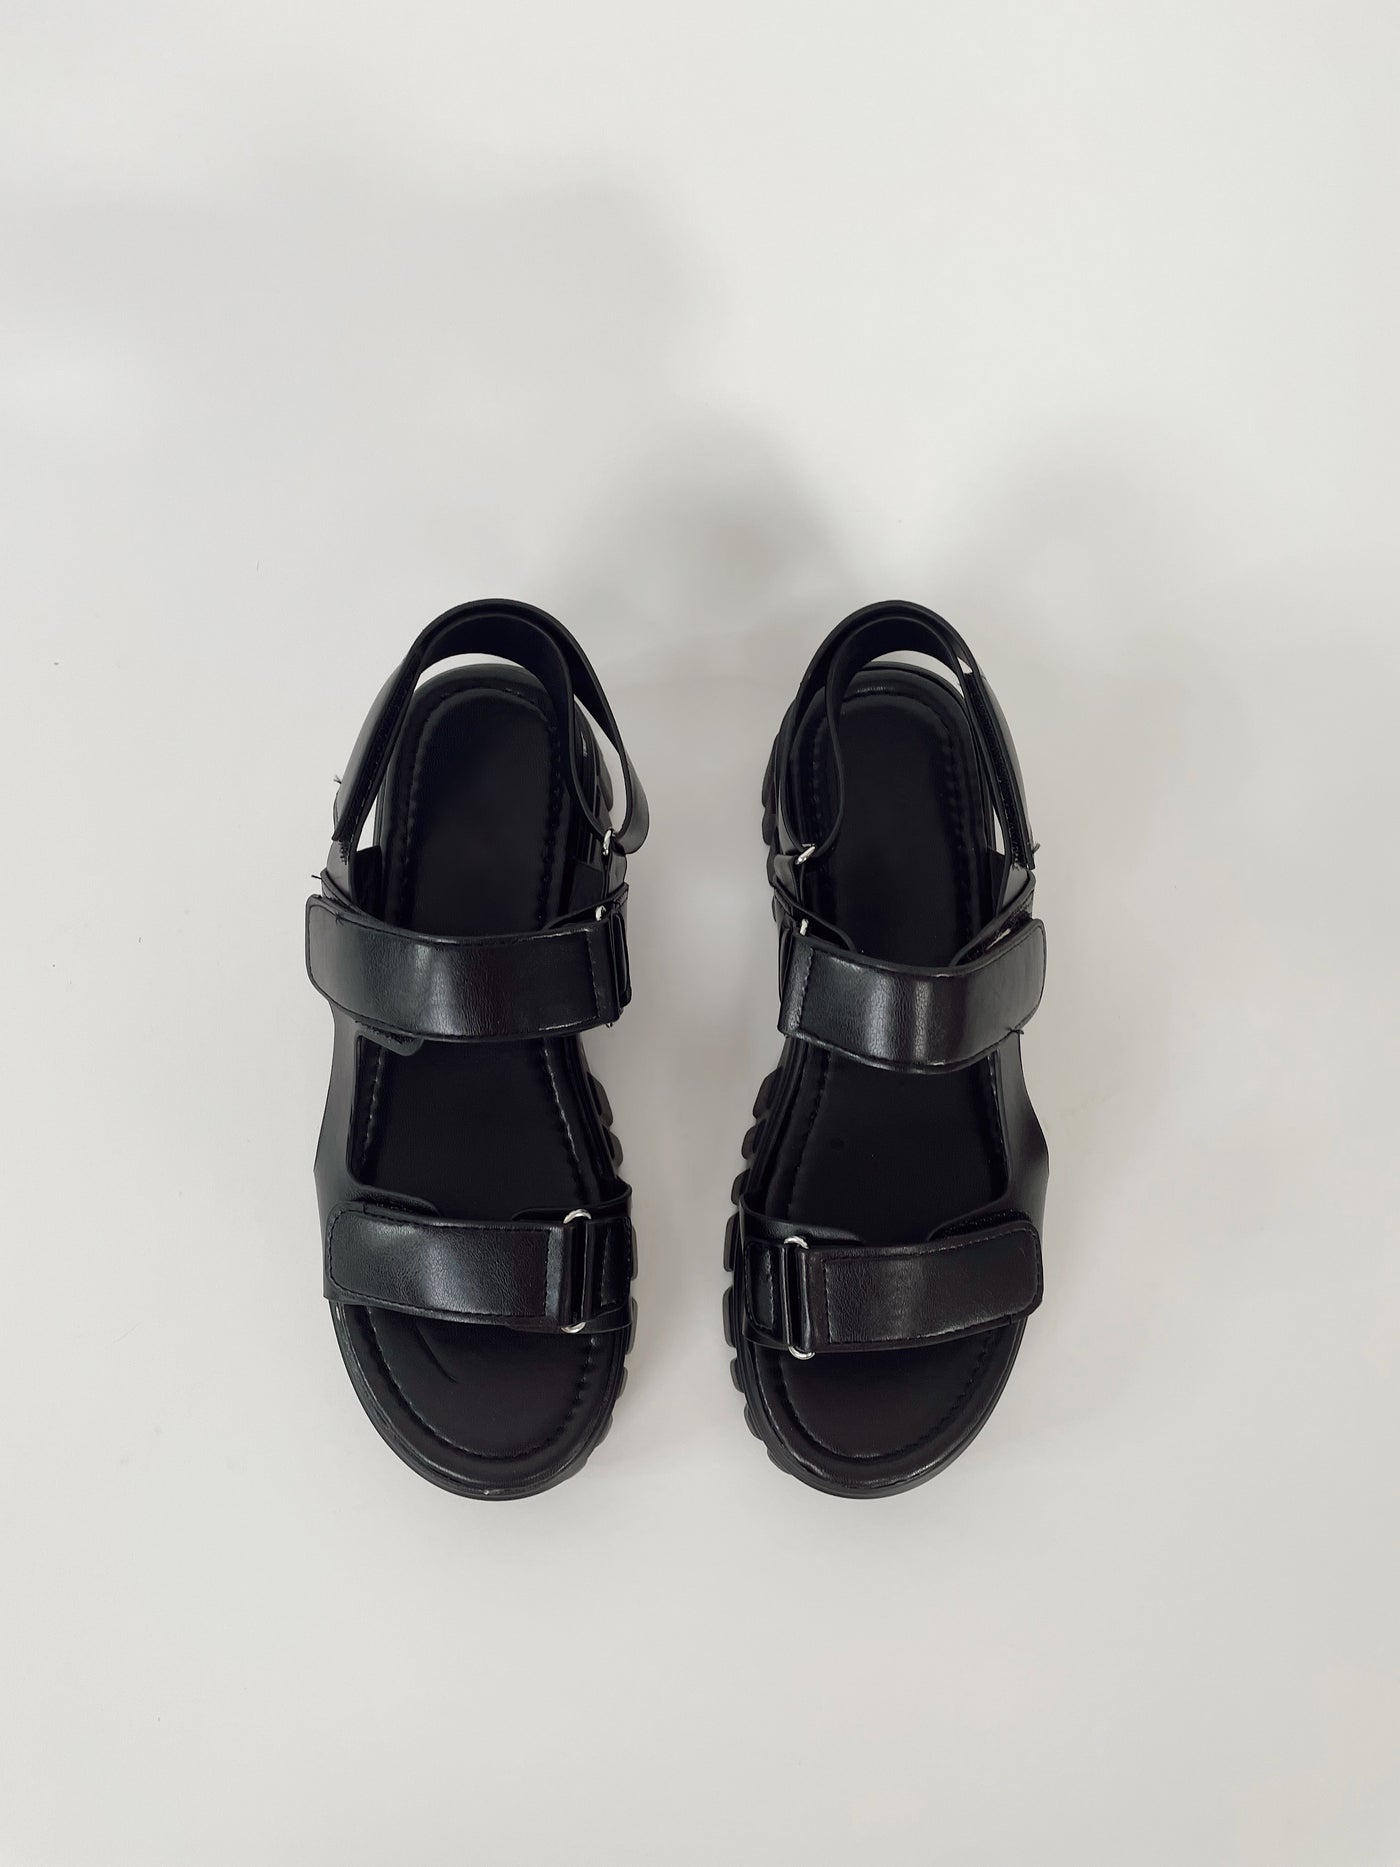 Reyes Sandals // Black